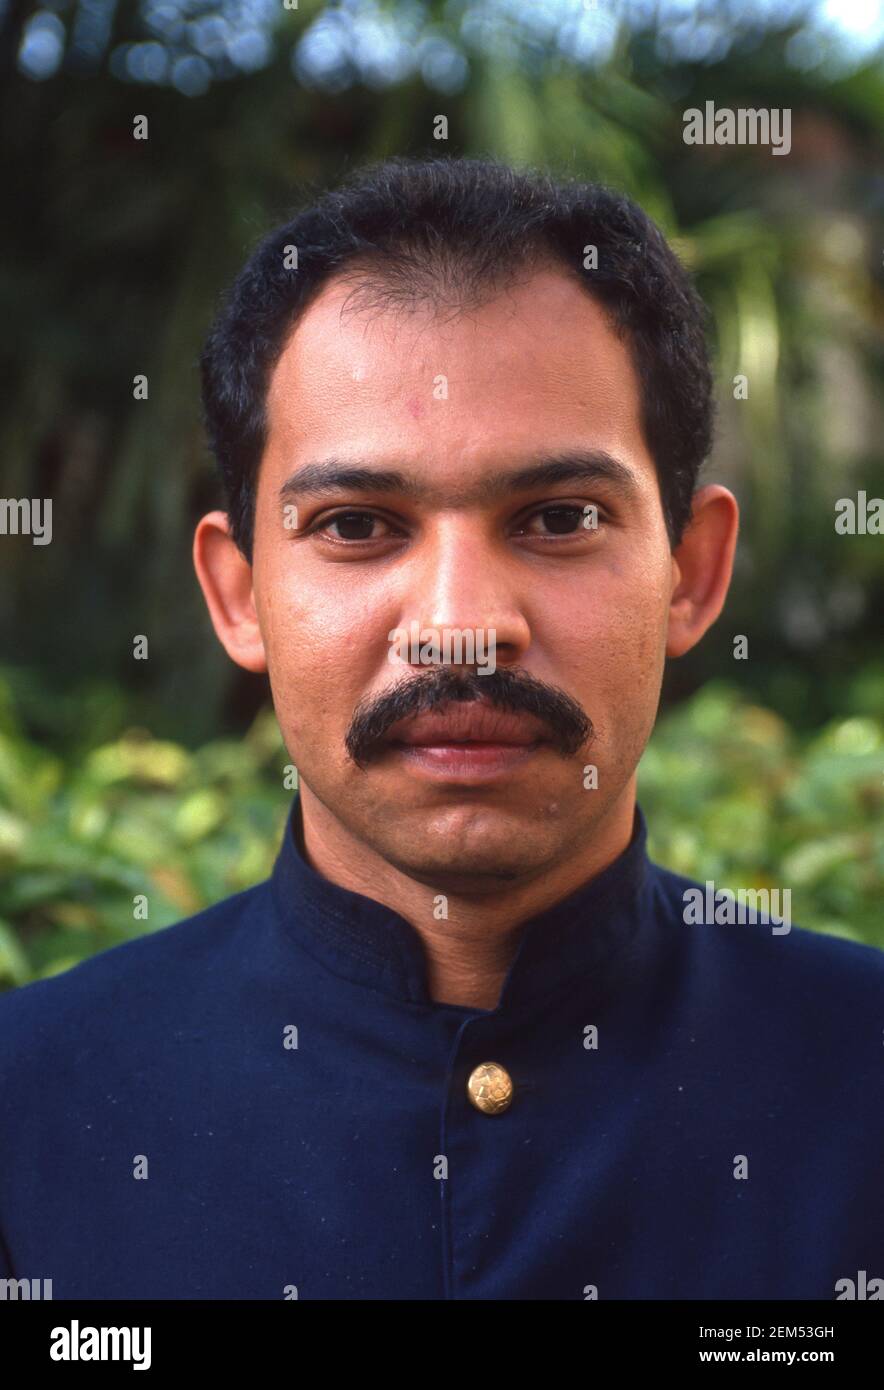 CARACAS, VENEZUELA, 1992 - Portrait of man with mustache. Stock Photo